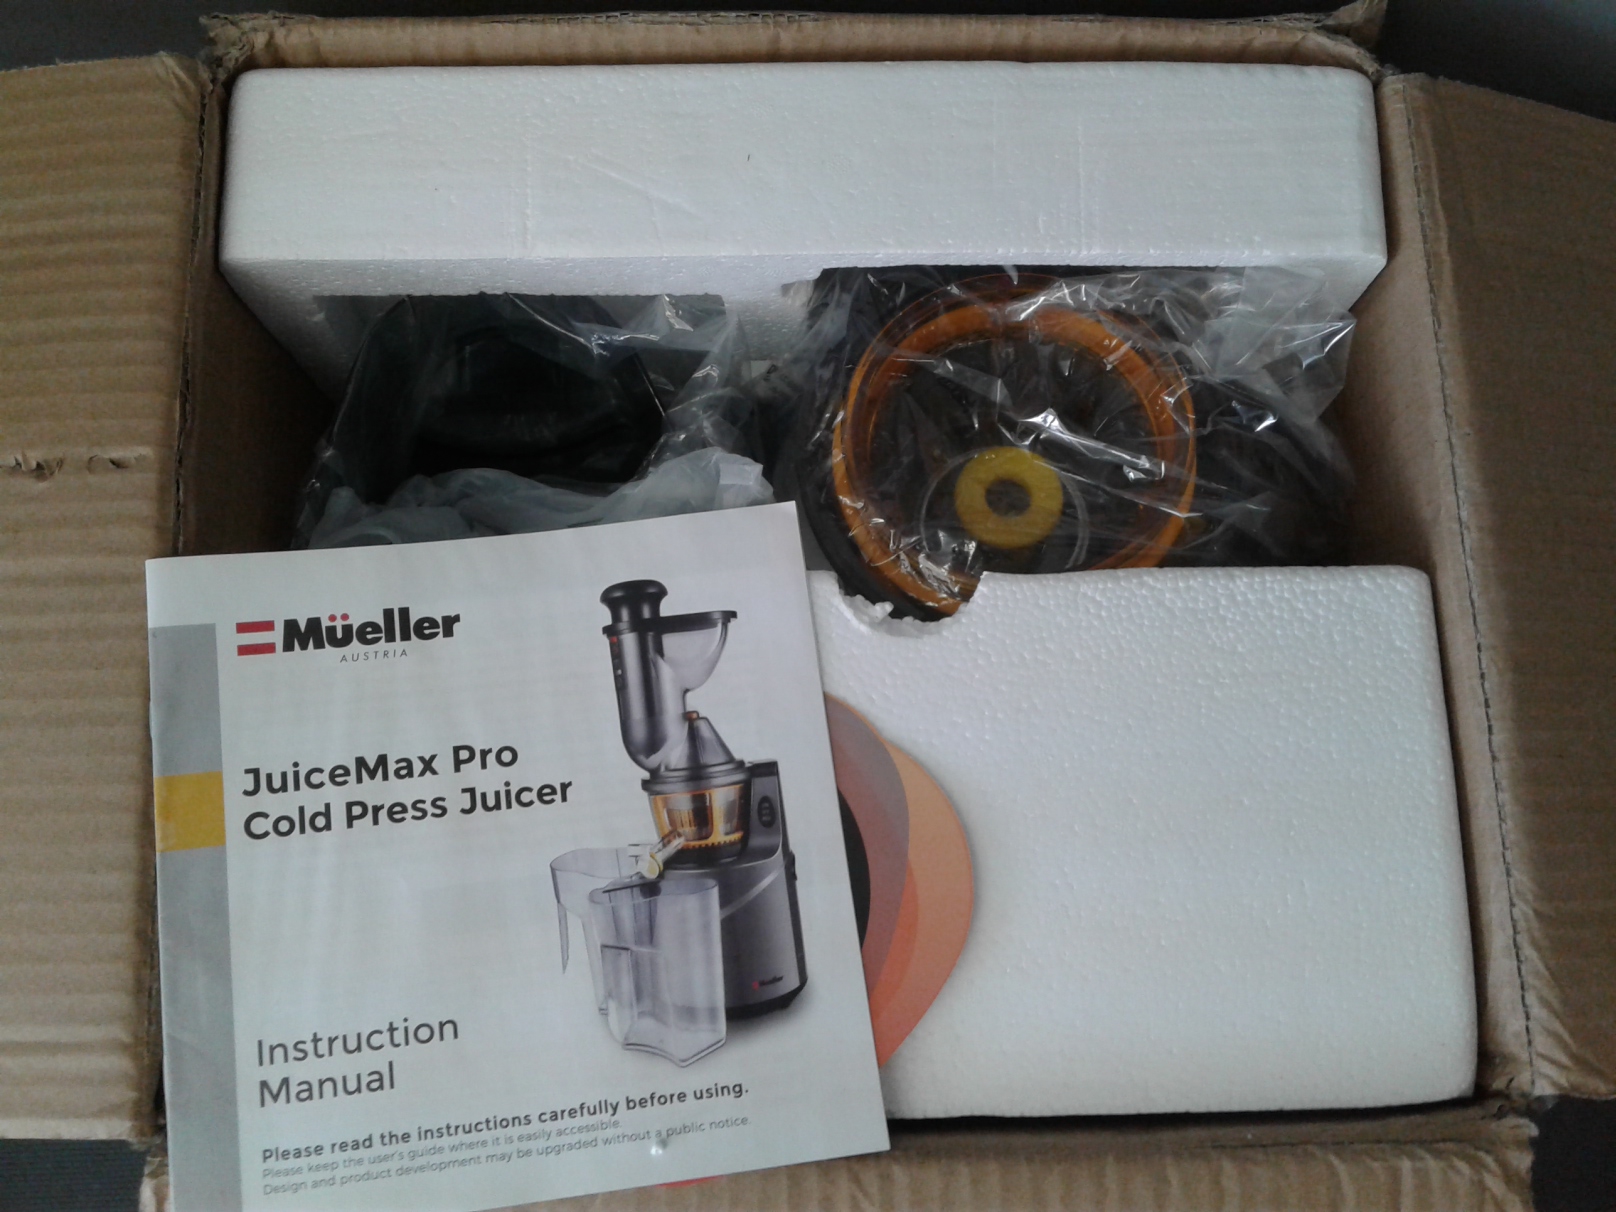 Sold at Auction: Mueller Austria Juicer Ultra Power Juicer